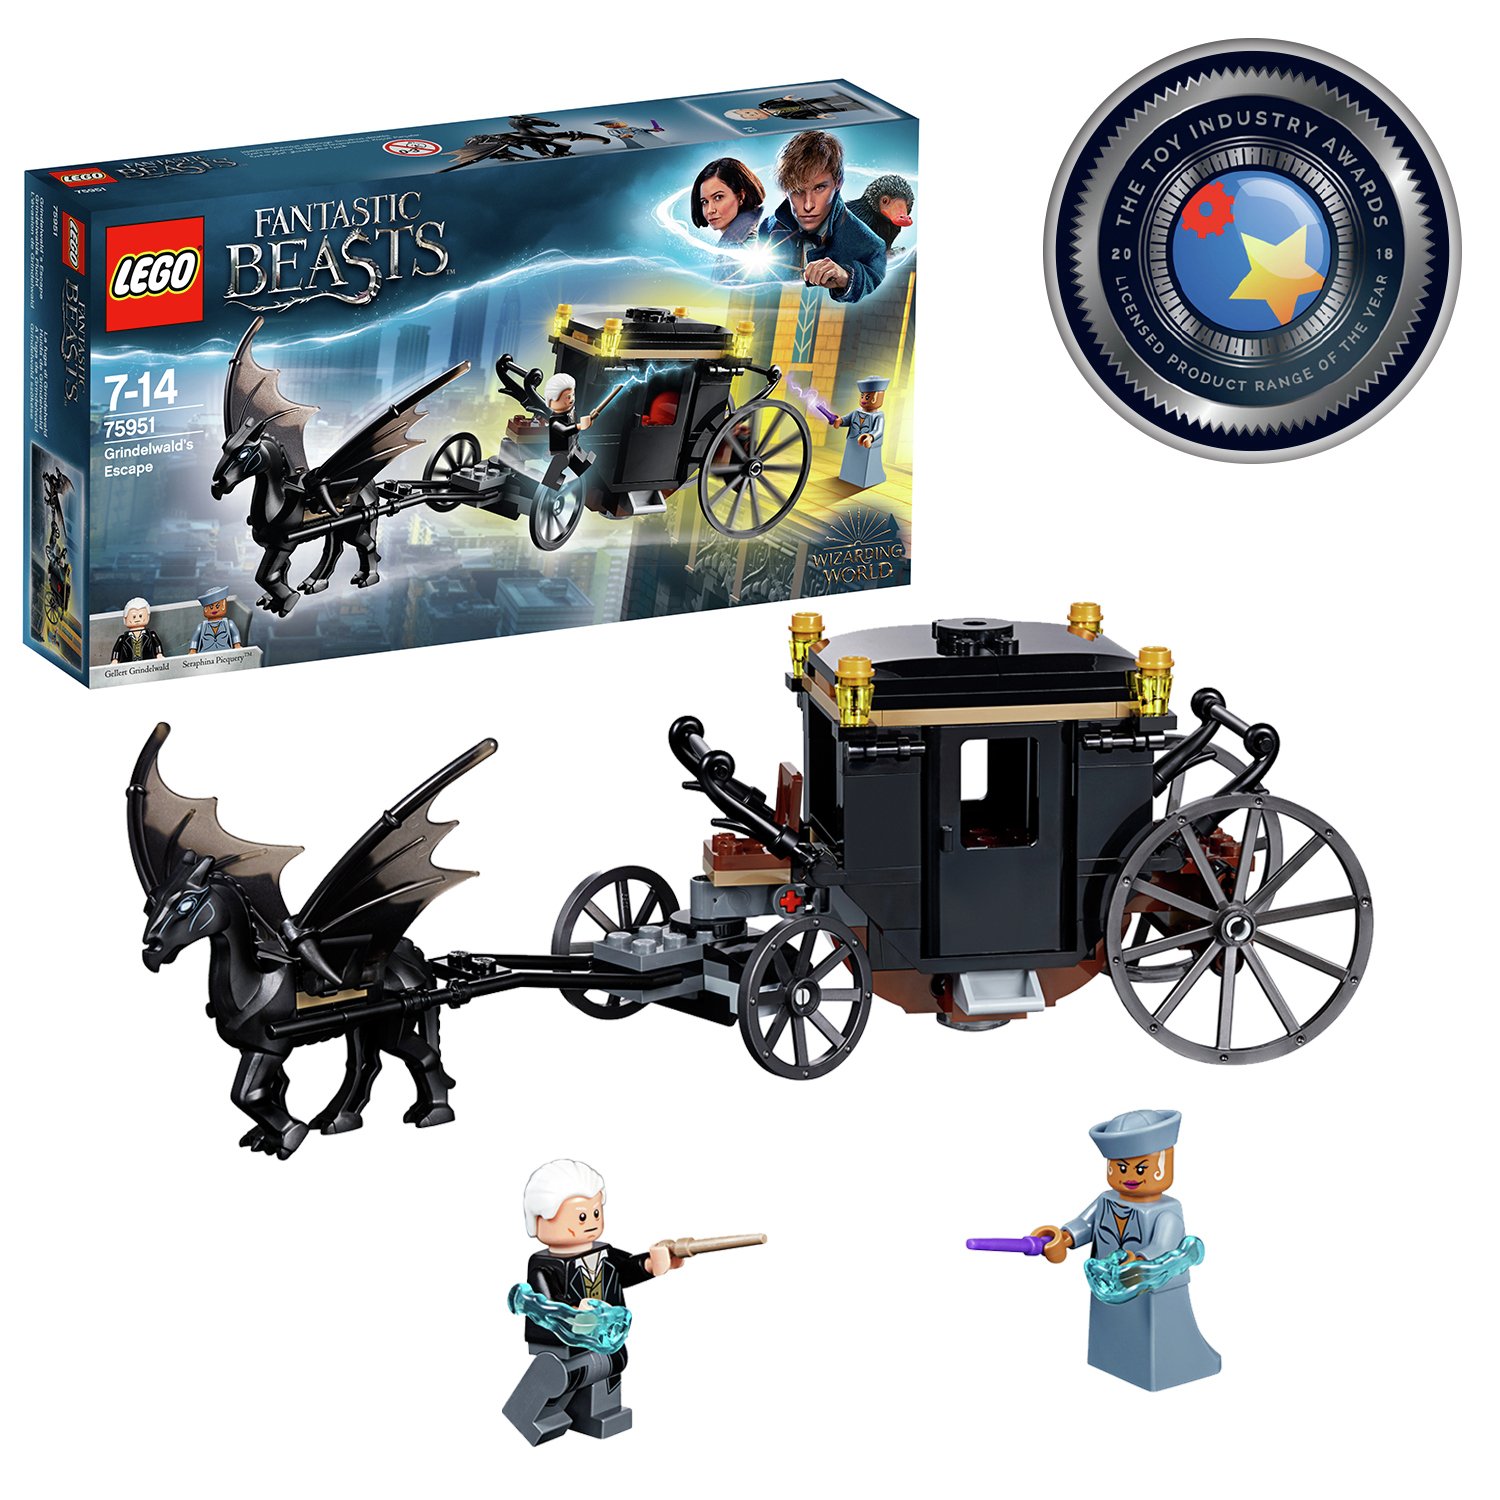 LEGO Fantastic Beasts Grindelwald's Escape Toy - 75951